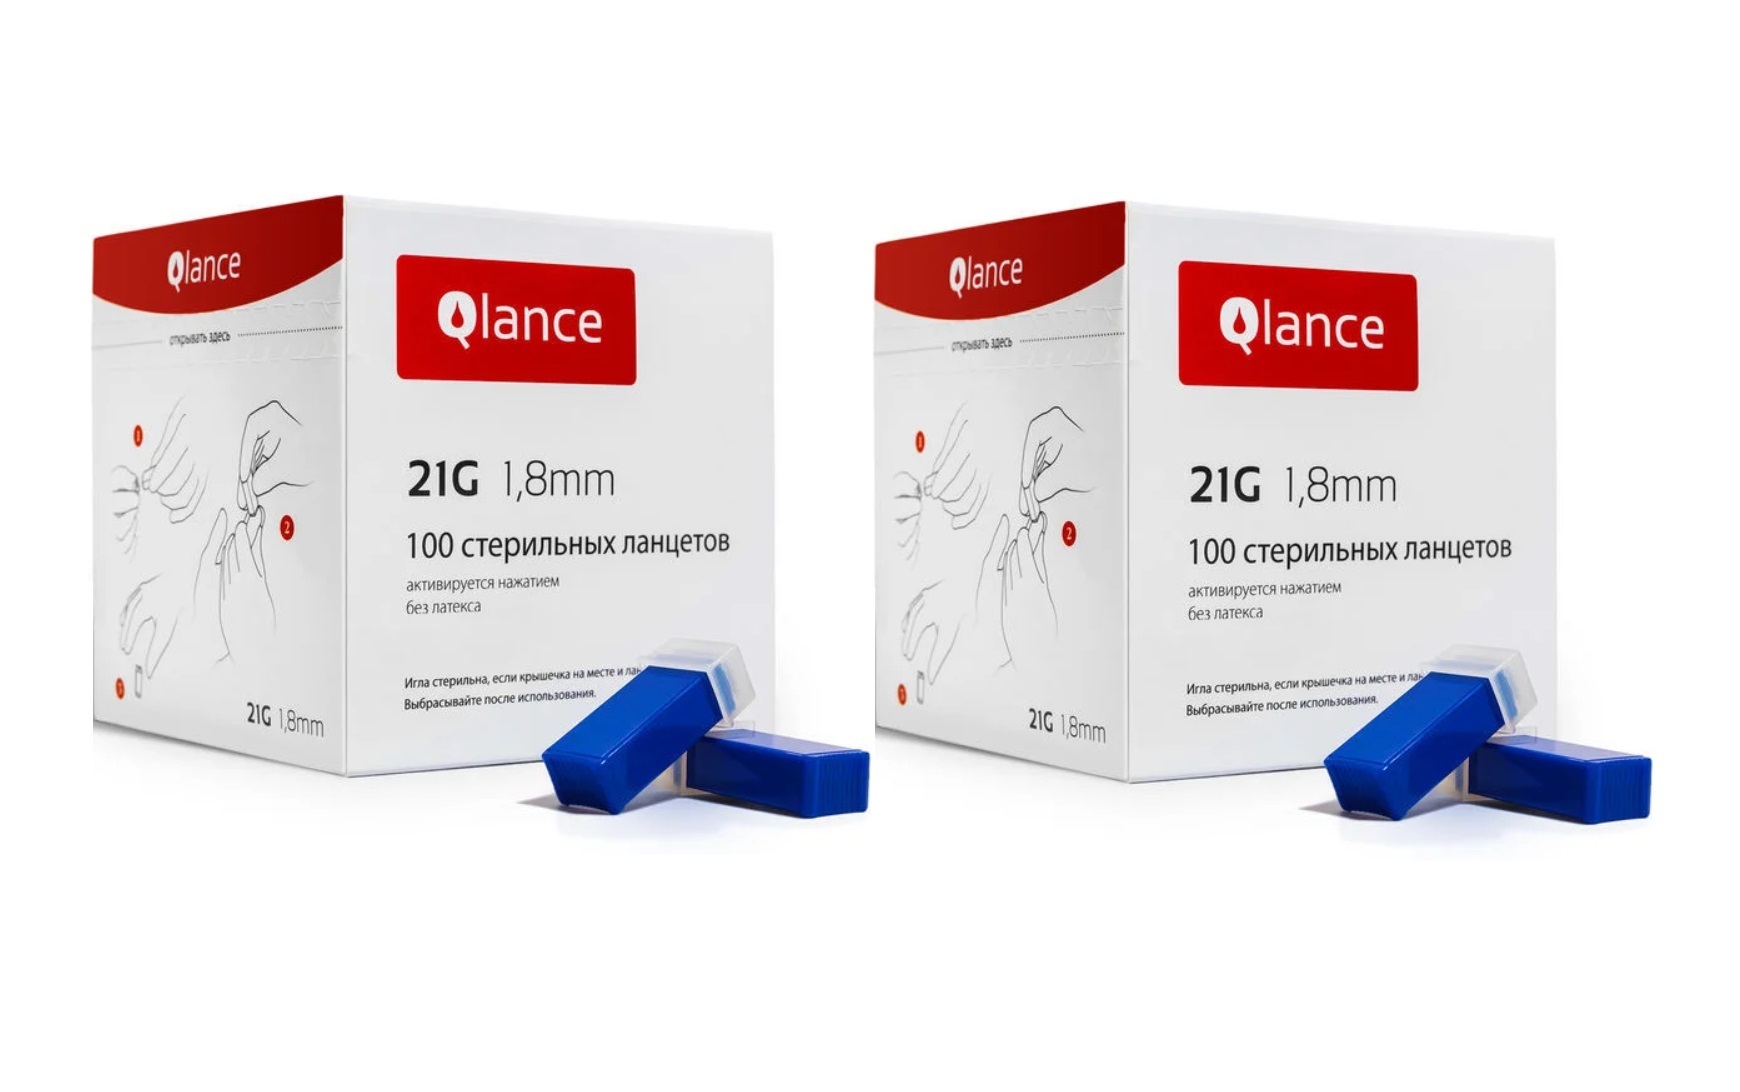 Ланцеты Qlance Universal 21G 1 автоматические скарификатор 2 упаковки по 100 шт